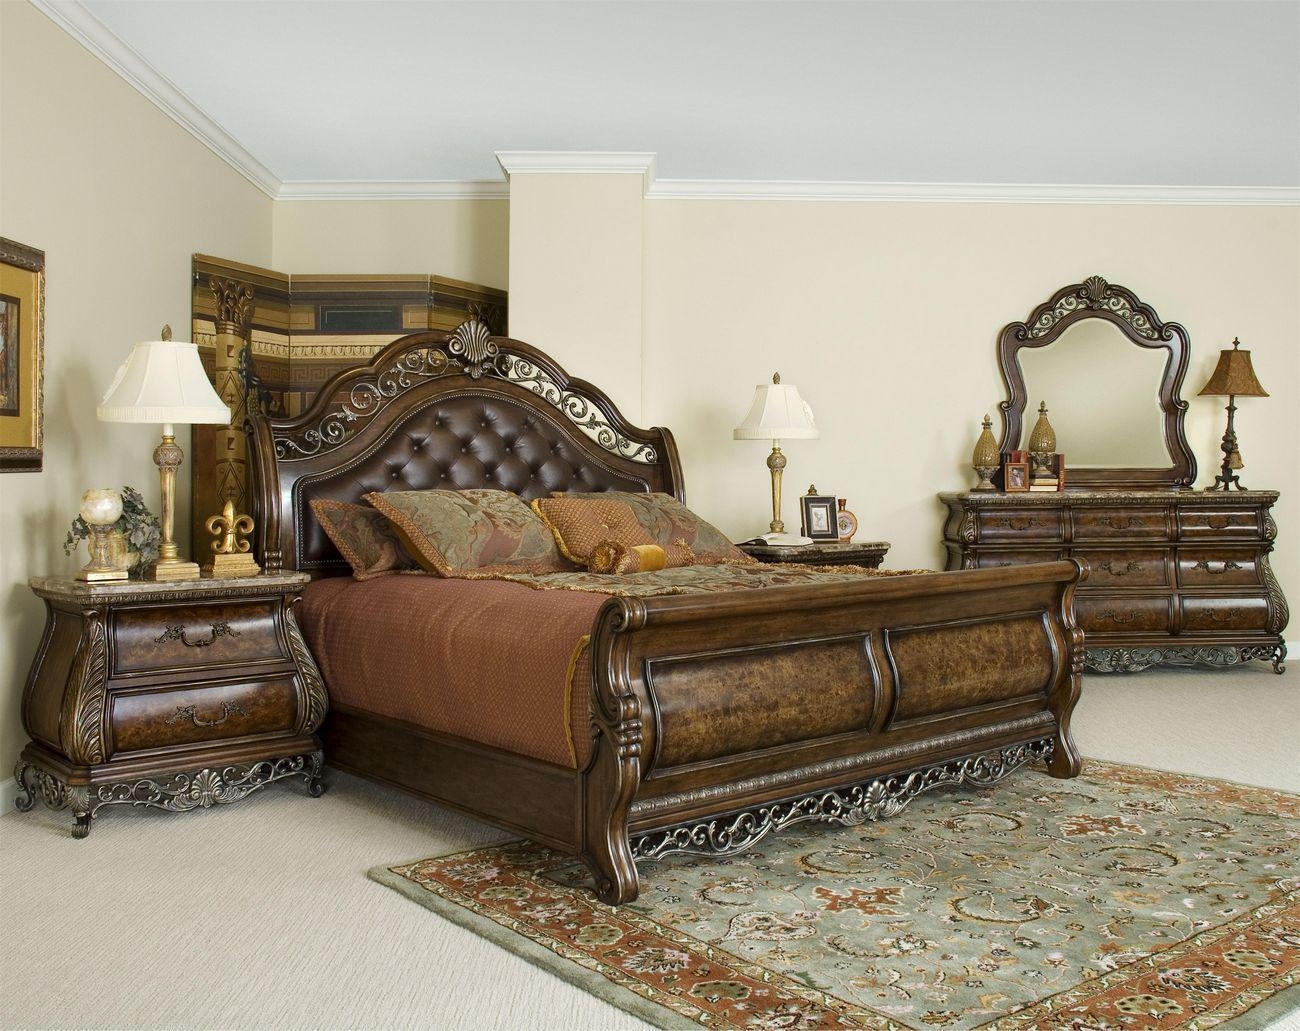 Pulaski edwardian bedroom